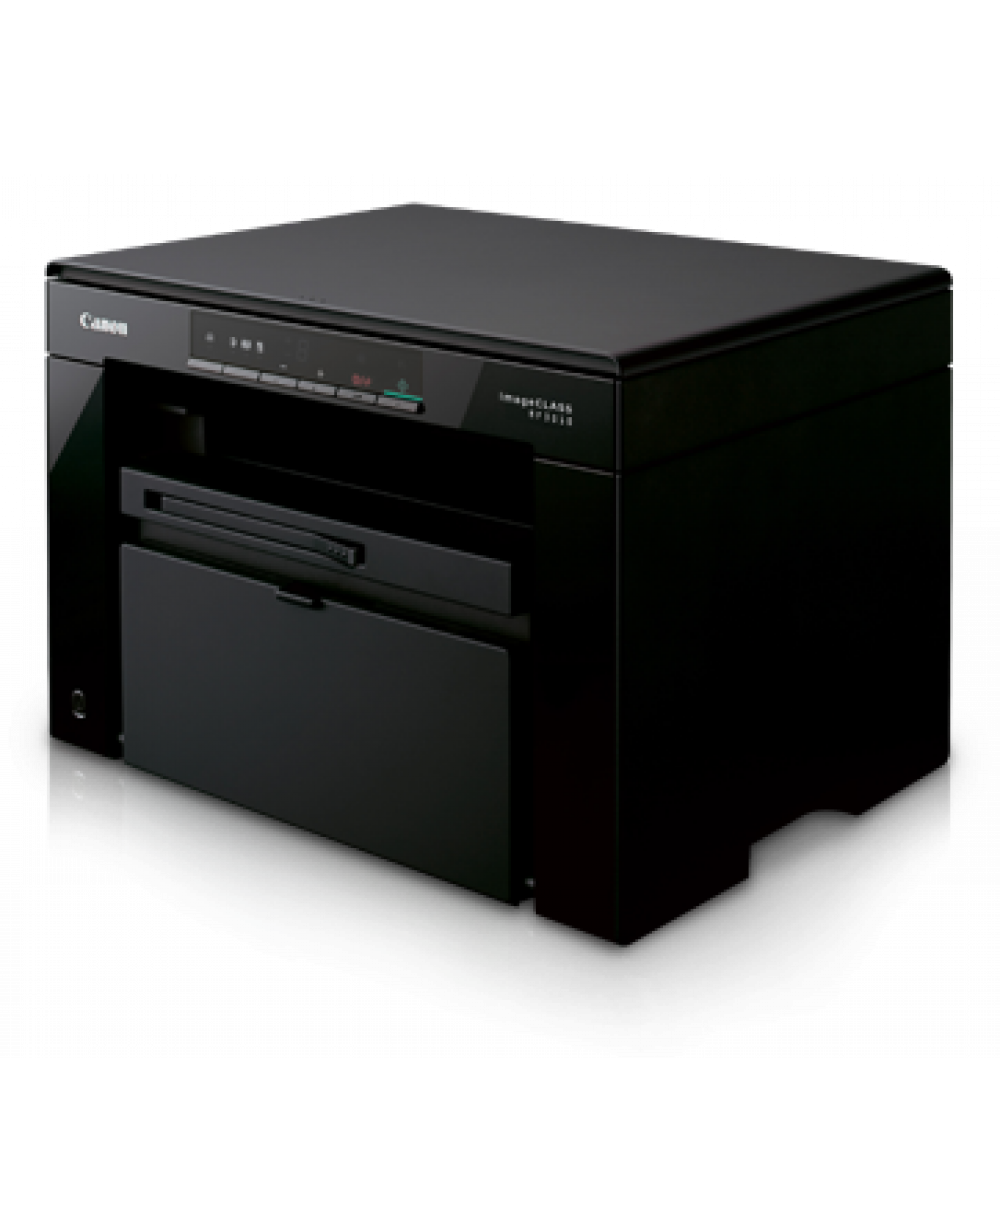 Canon Mf3010 Price - CANON MF3010: Multifunctional laser printer at ...